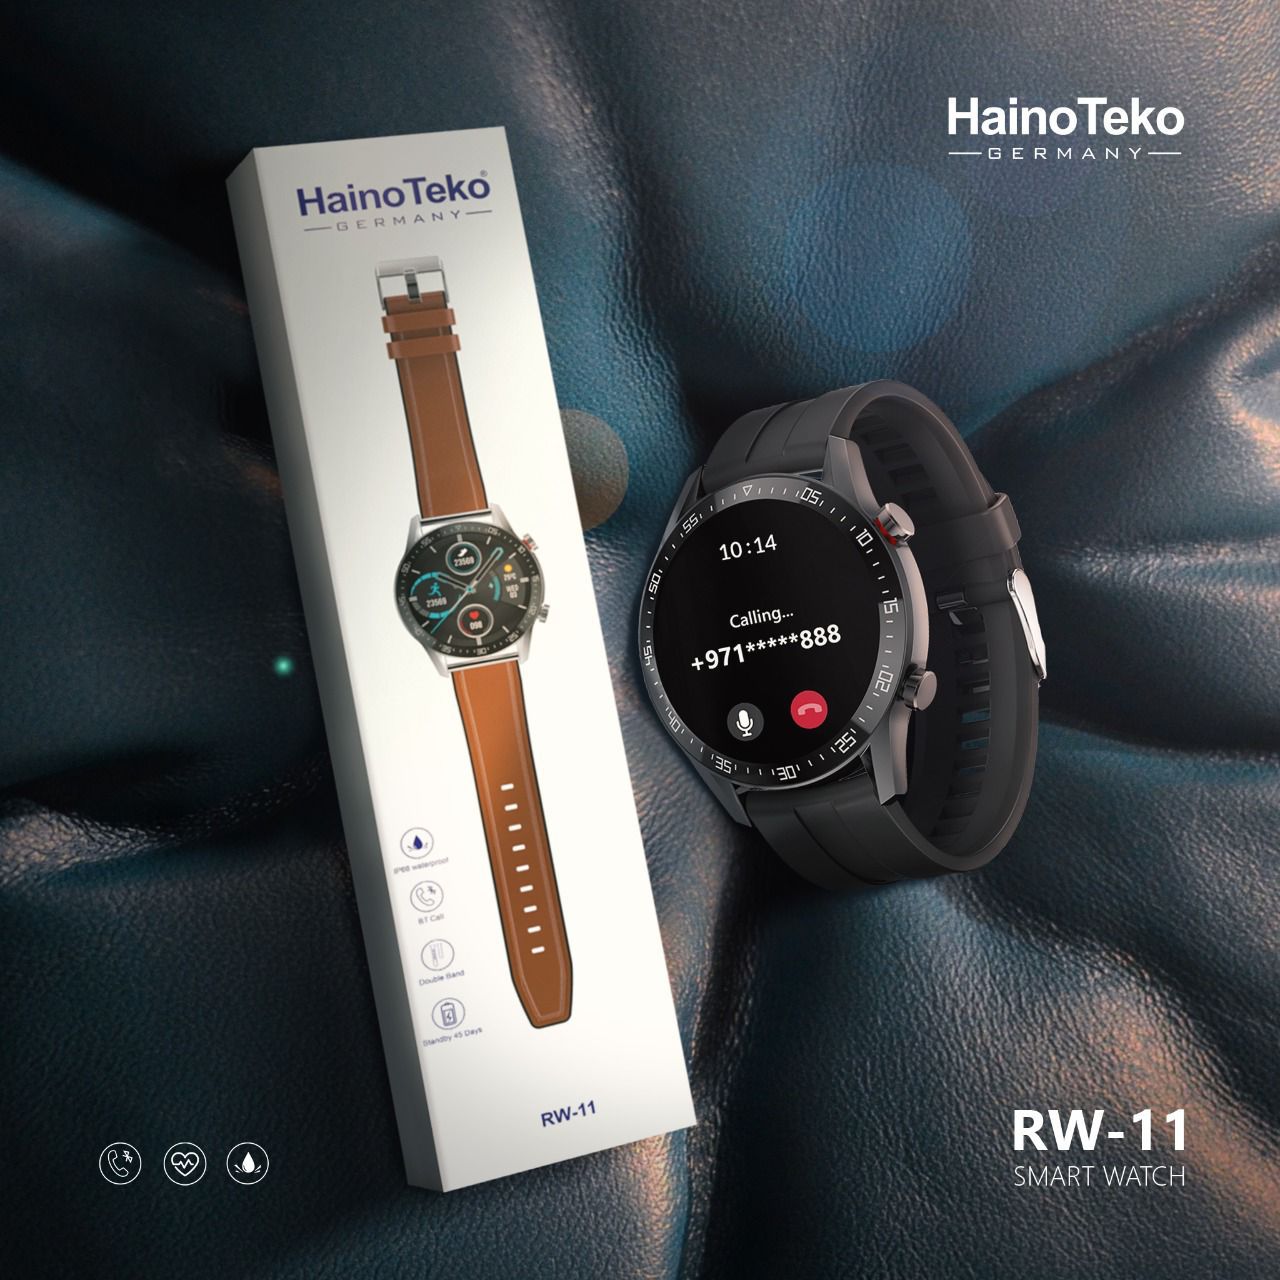 Haino Teko Germany Watch RW-11